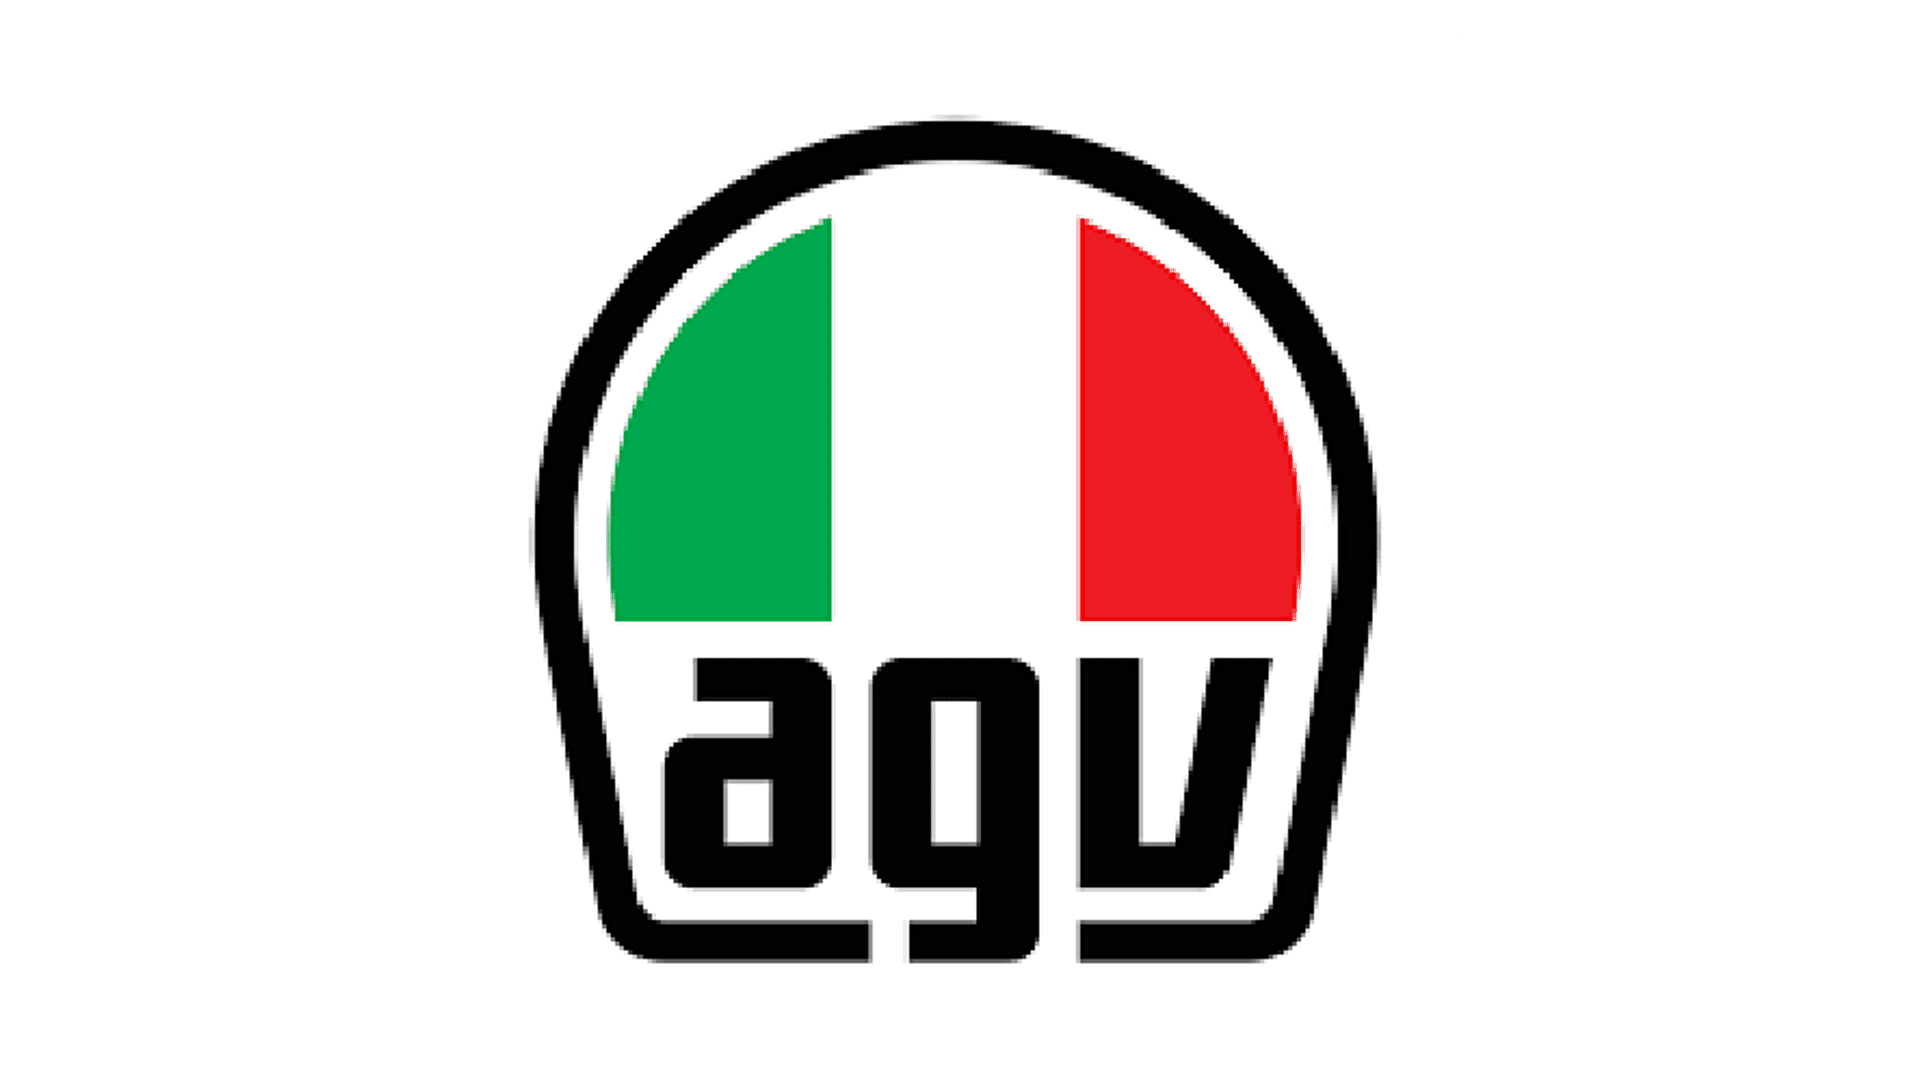 Official Sponsor, AGV